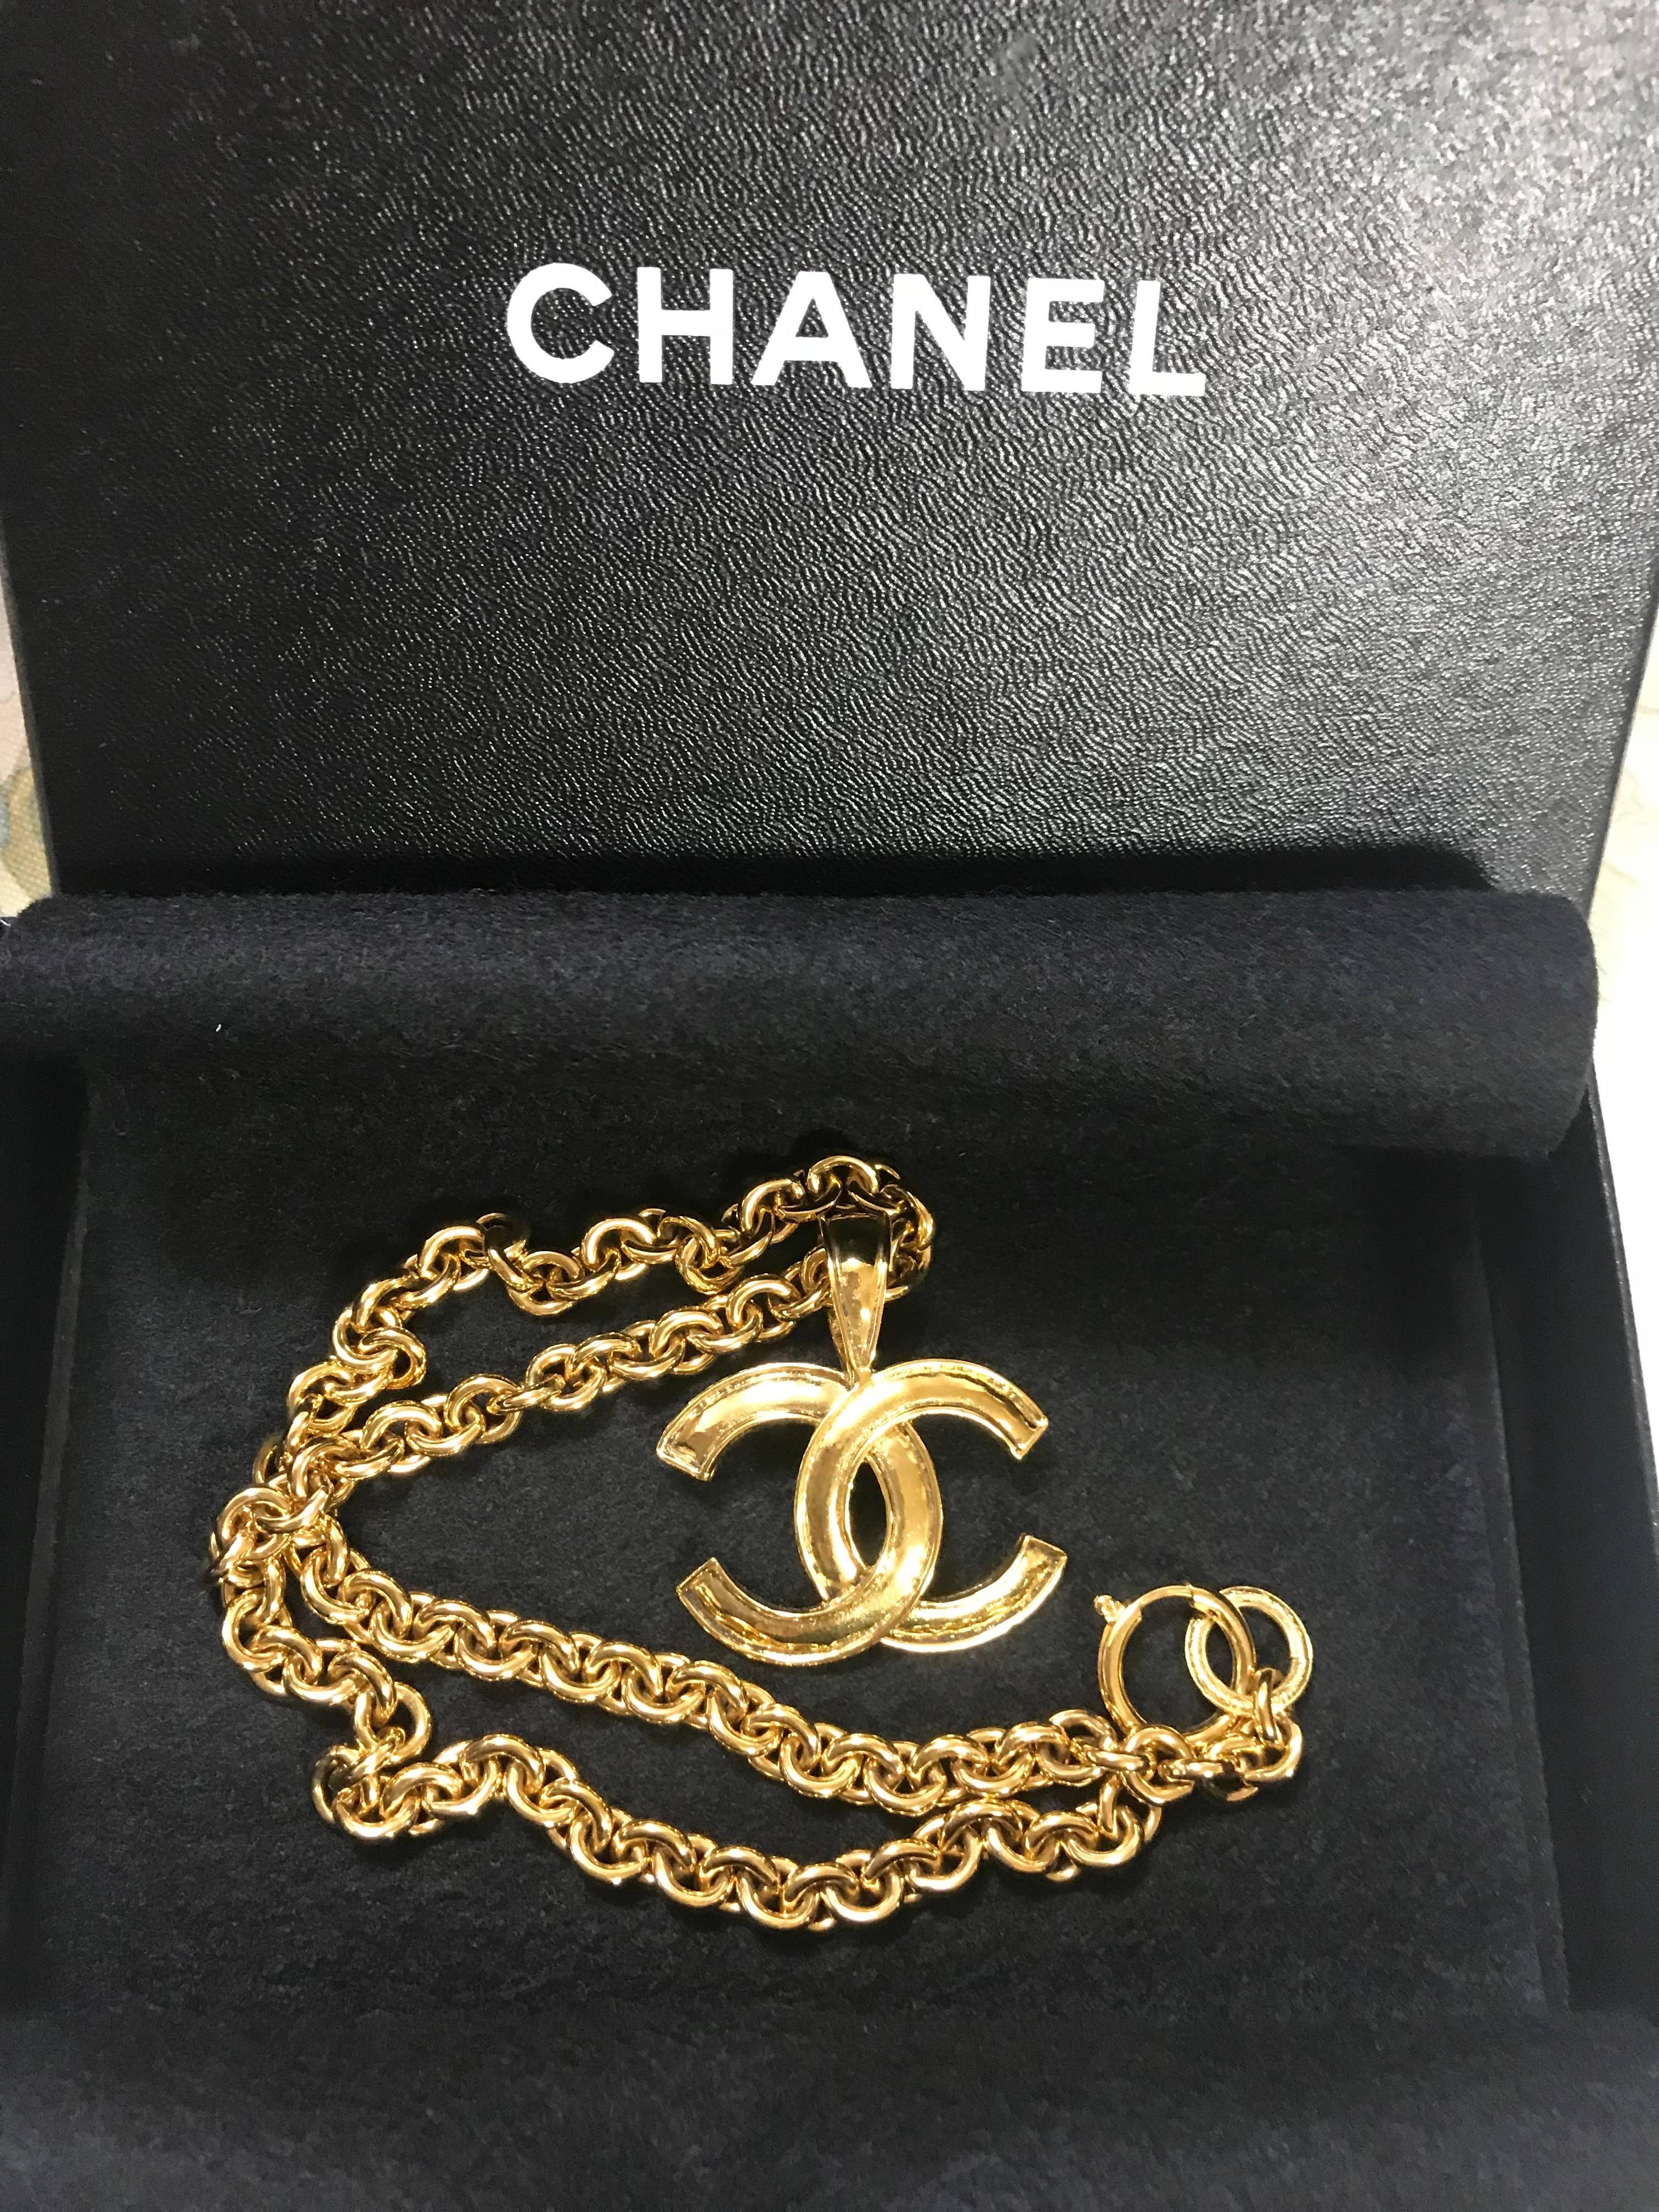 MINT. Vintage CHANEL golden chain necklace with large CC mark logo pendant top.  4